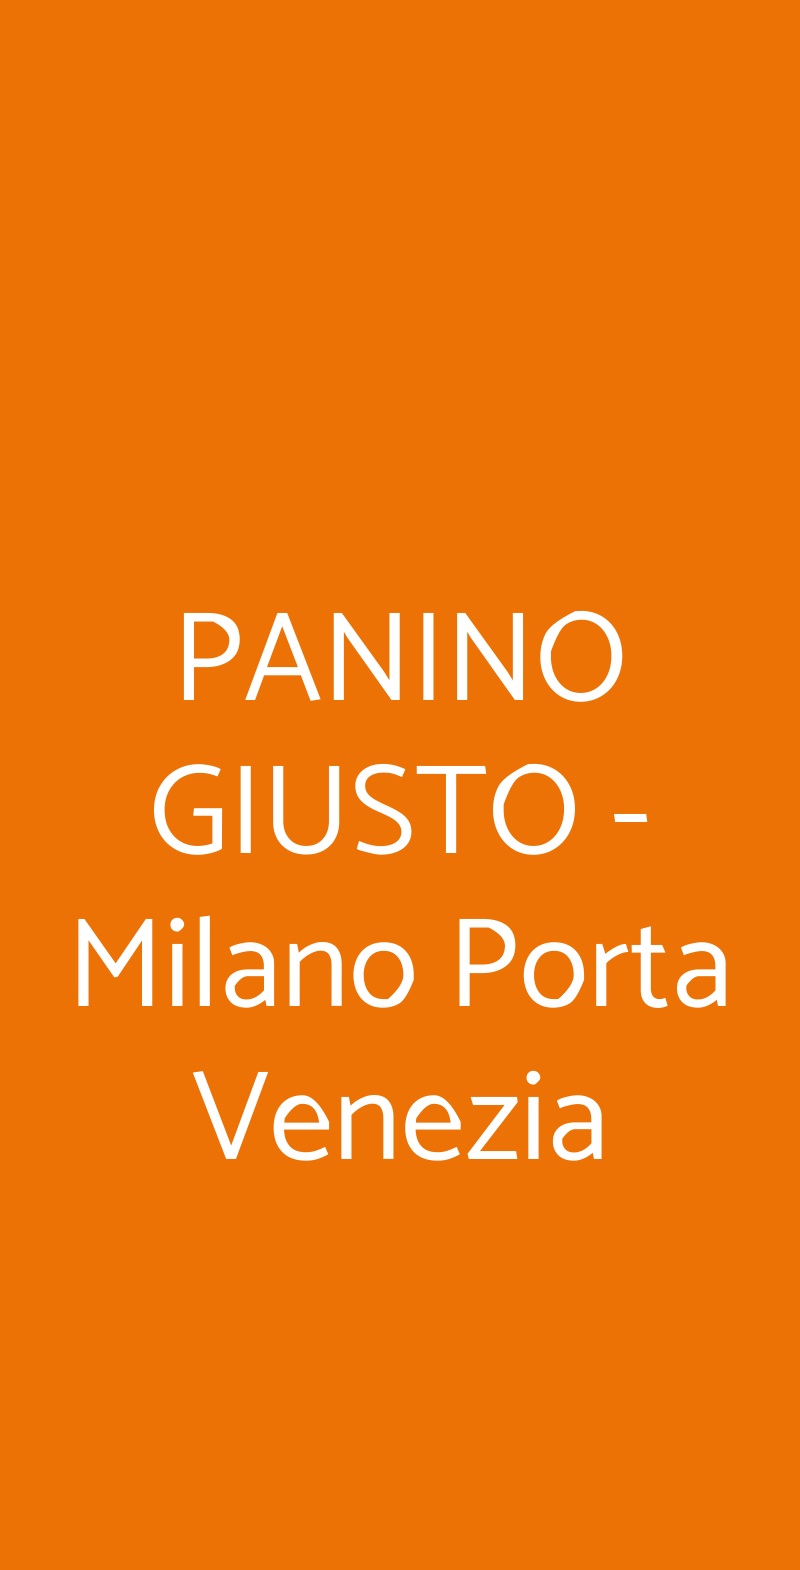 PANINO GIUSTO - Milano Porta Venezia Milano menù 1 pagina